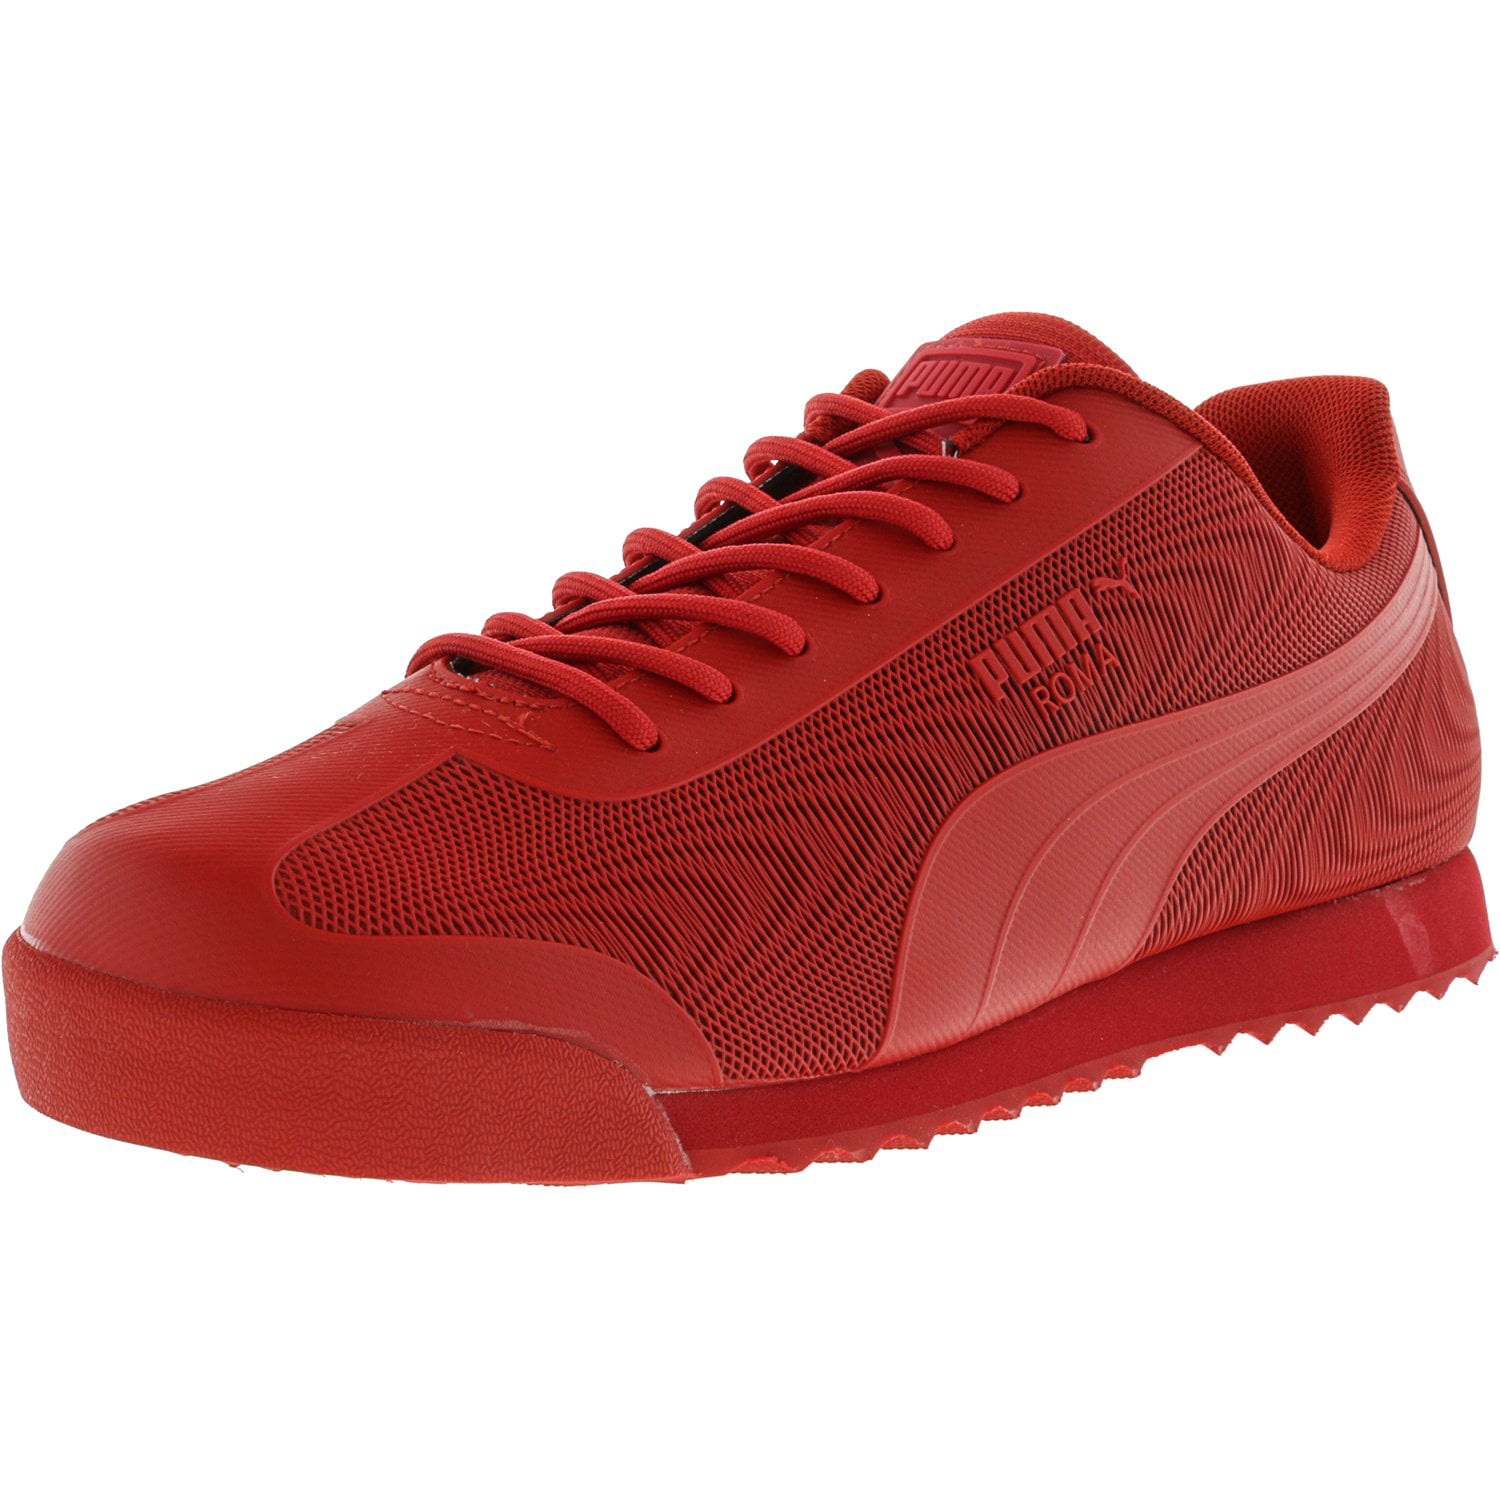 PUMA - Puma Men's Roma Tk Fade High Risk Red Ankle-High Fashion Sneaker ...